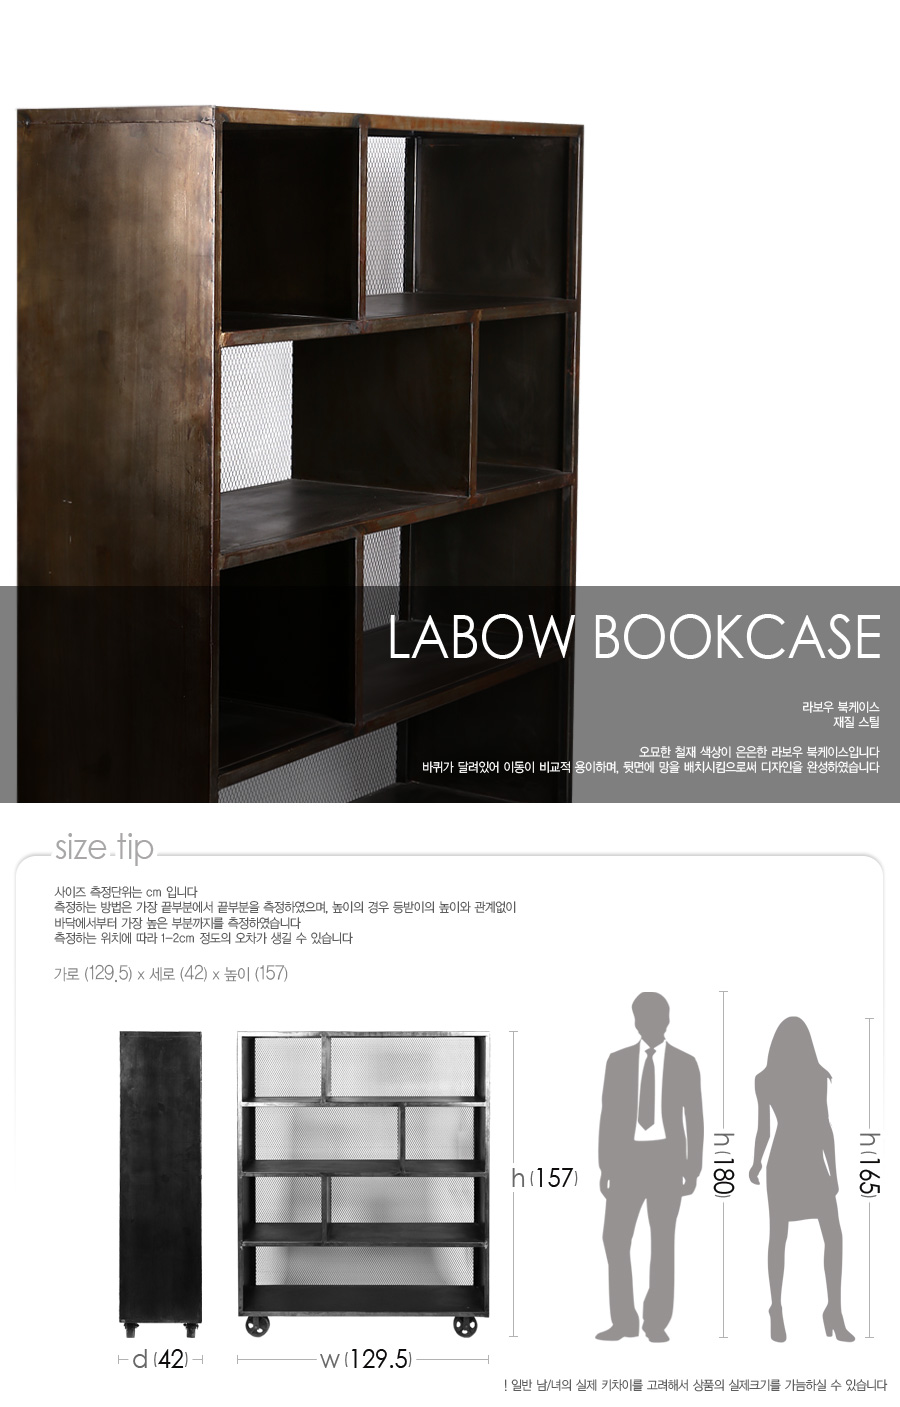 labow-bookcase_01.jpg